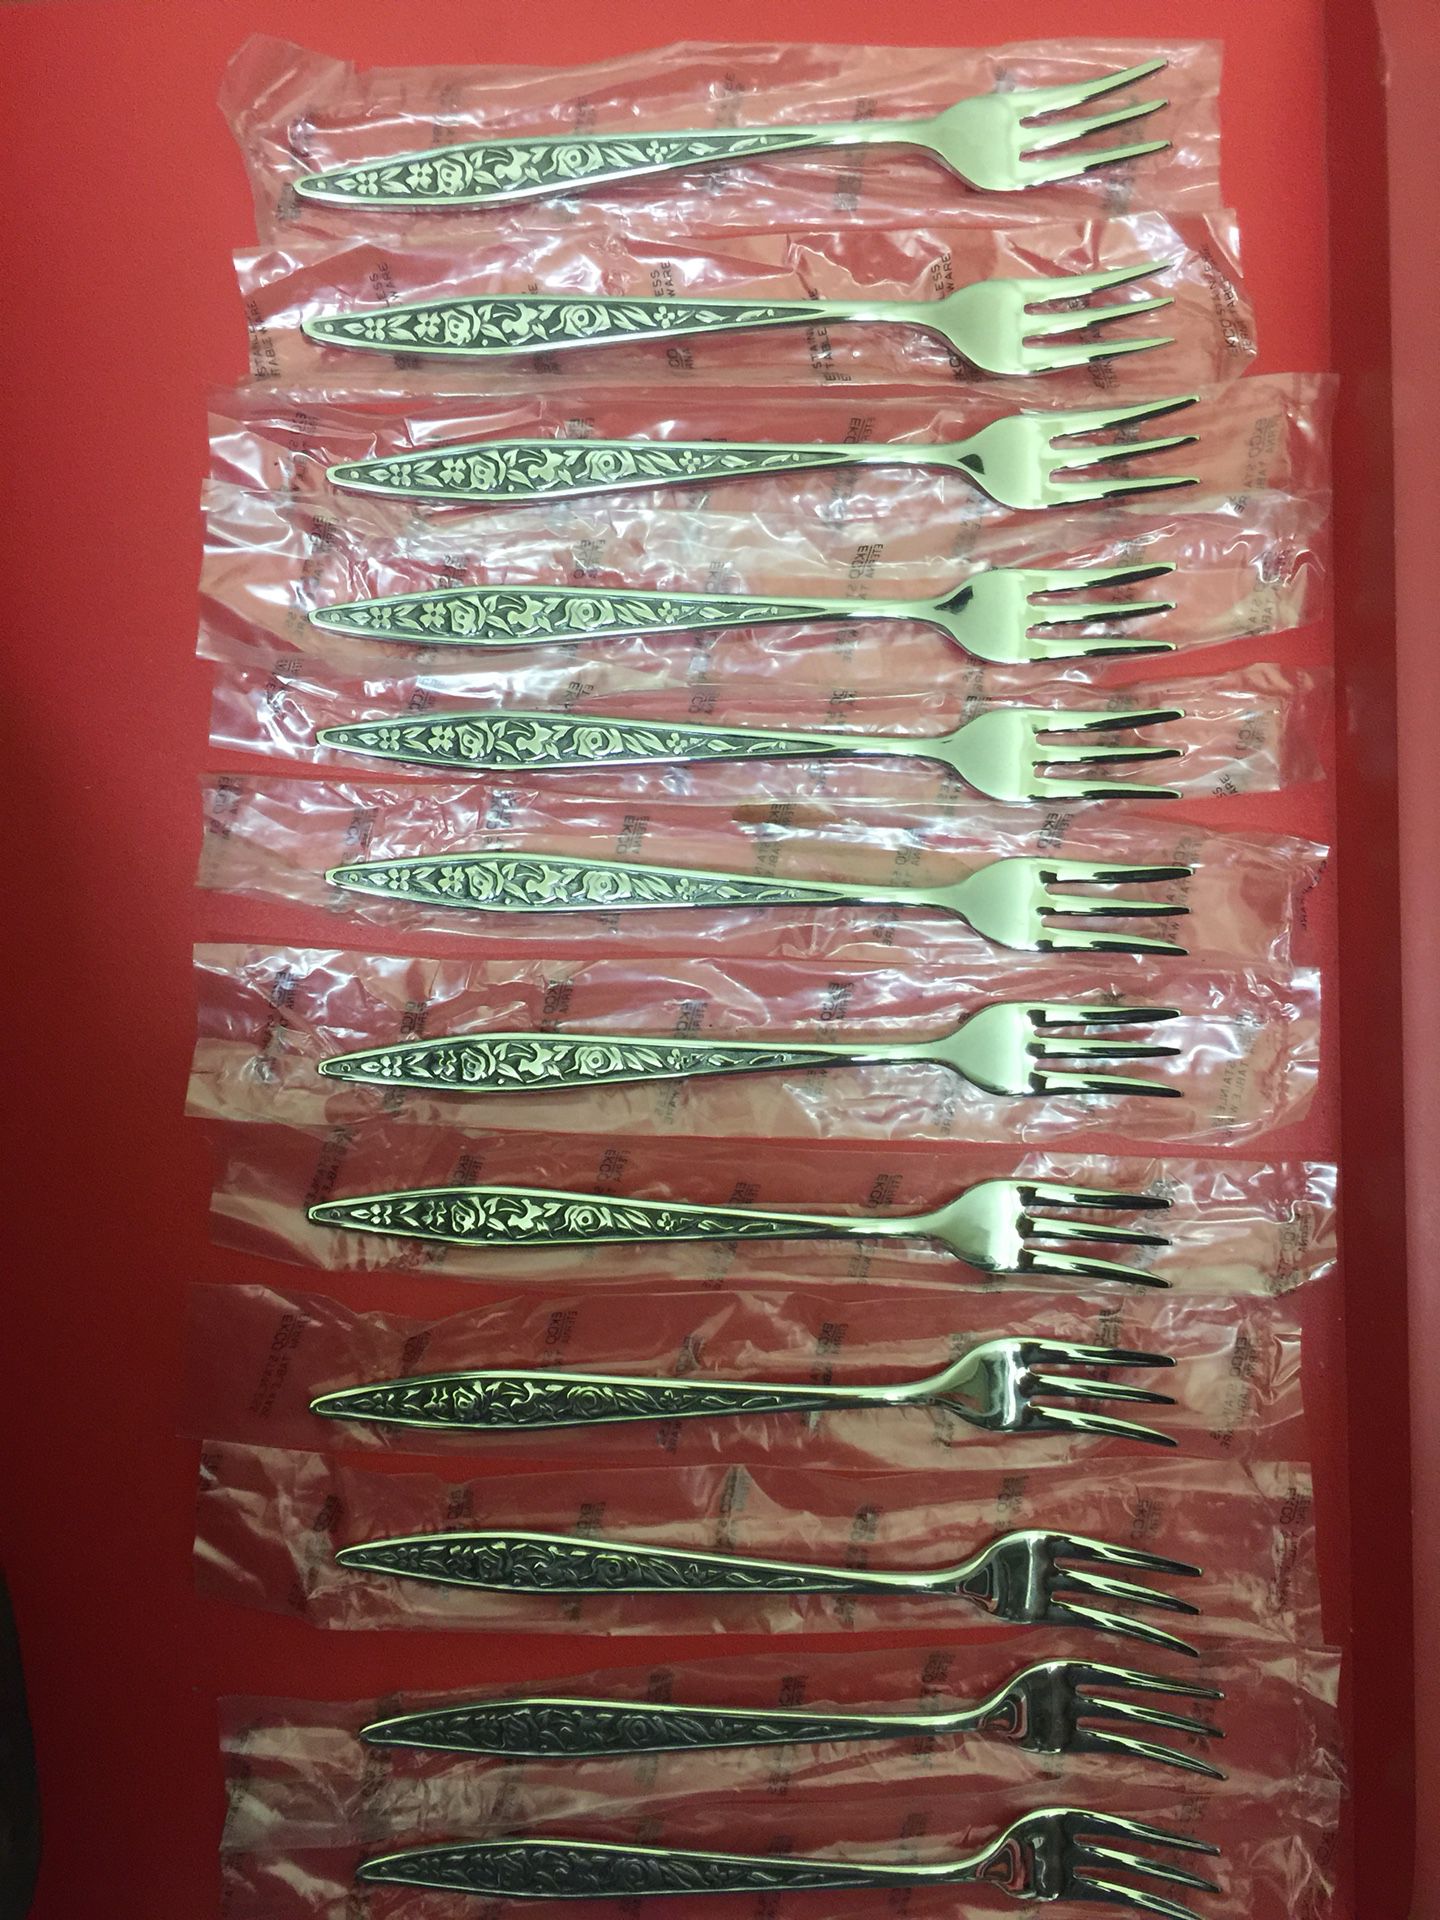 12oyster/desert forks made in Japan ecko eterna Santiago pattern